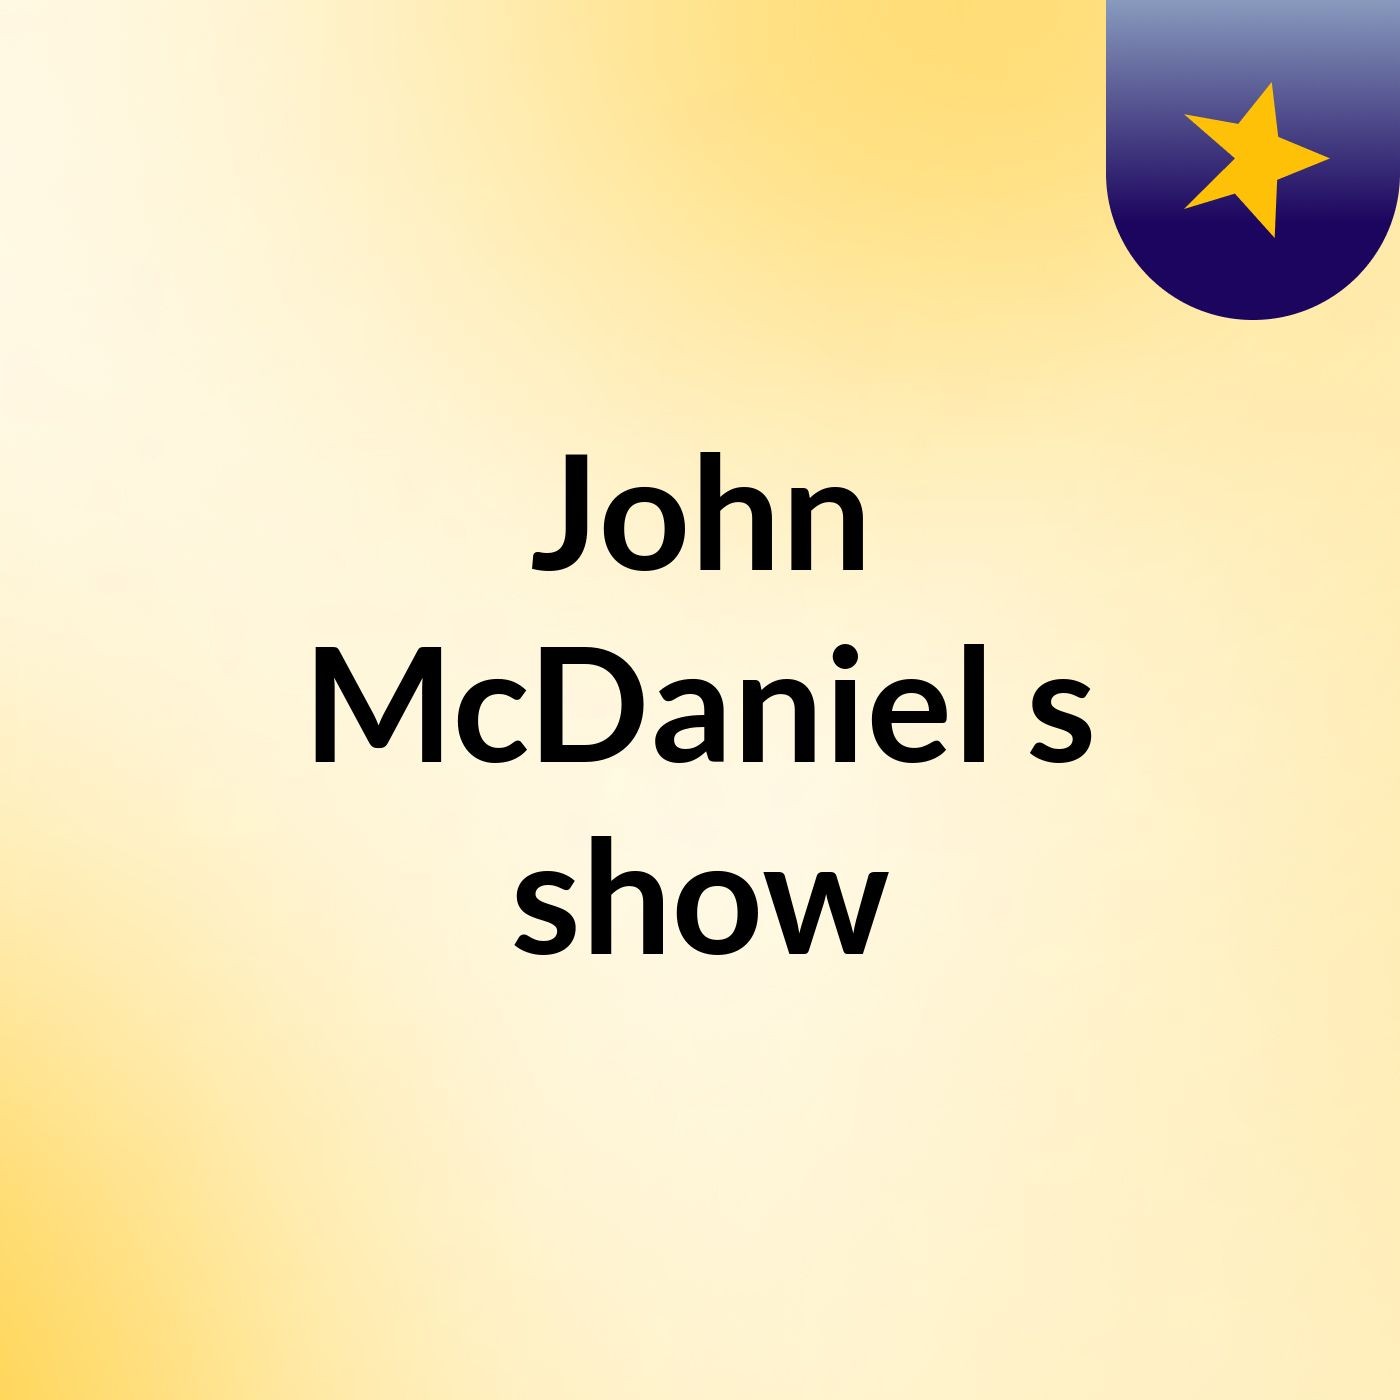 3Power TrioEpisode 2 - John McDaniel's show